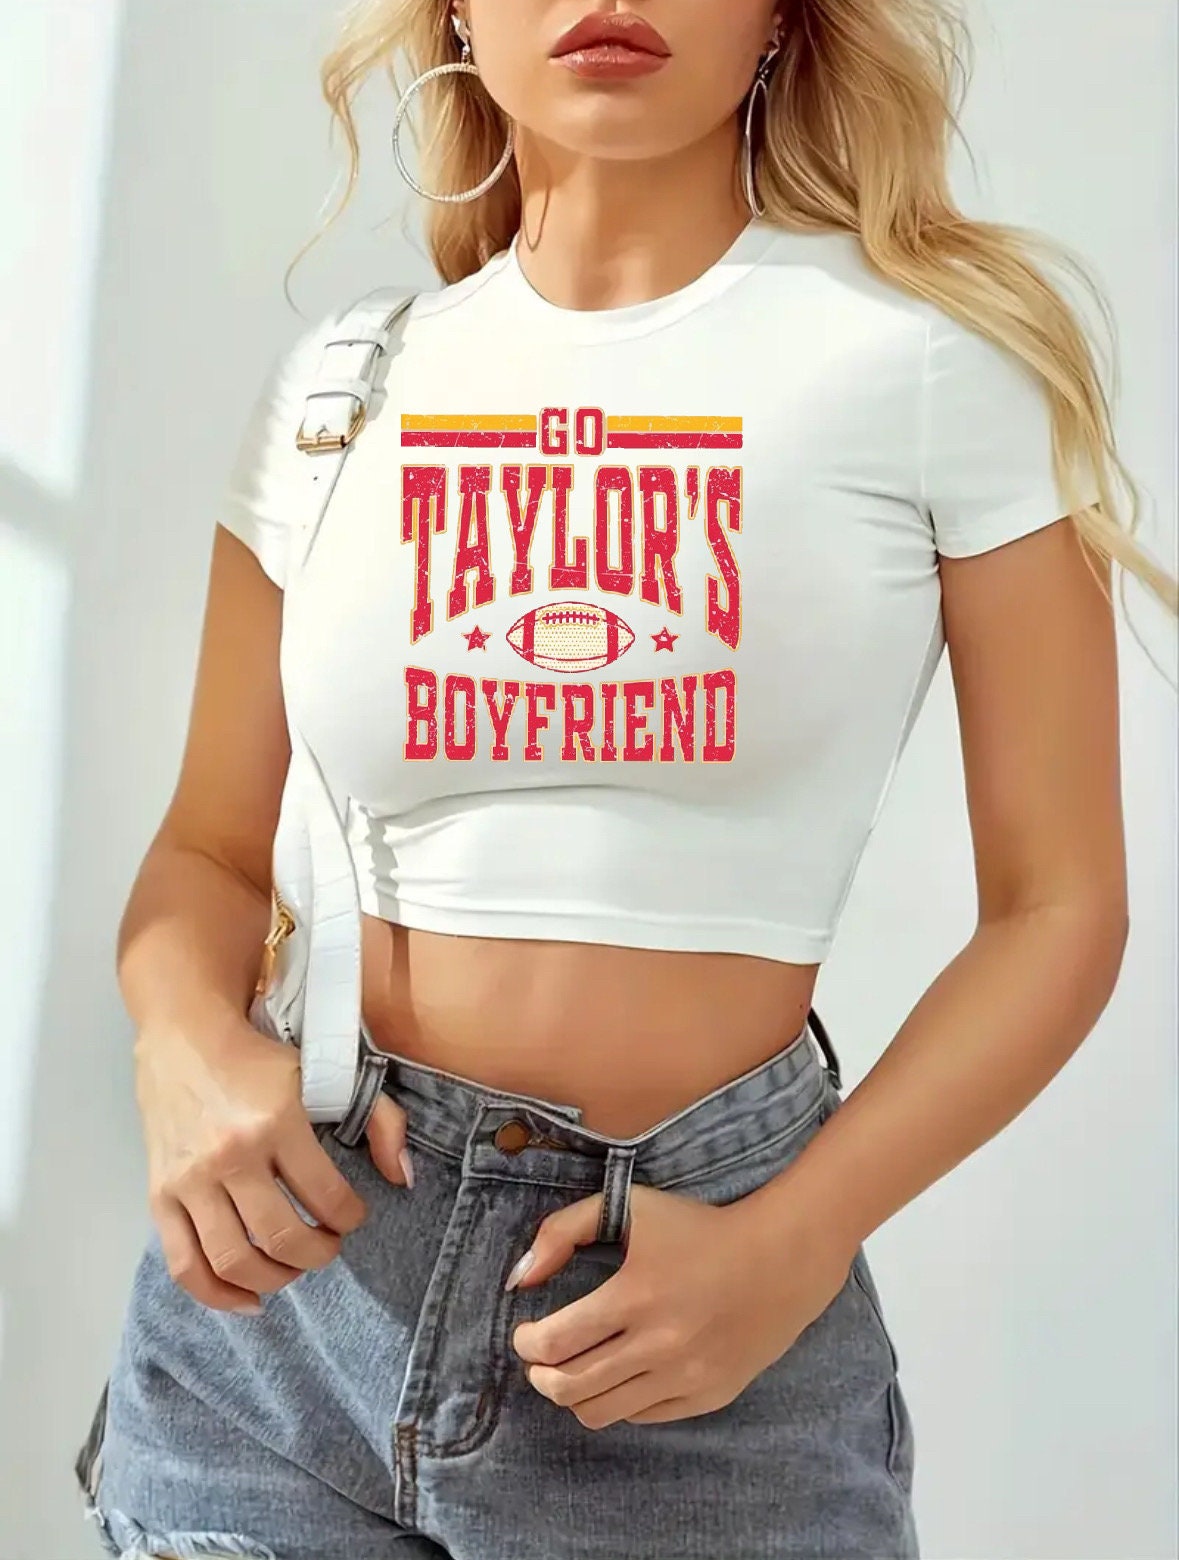 Go Taylor's Boyfriend Taylor Crop Top Shirt, Taylor Flowy Cropped Tee